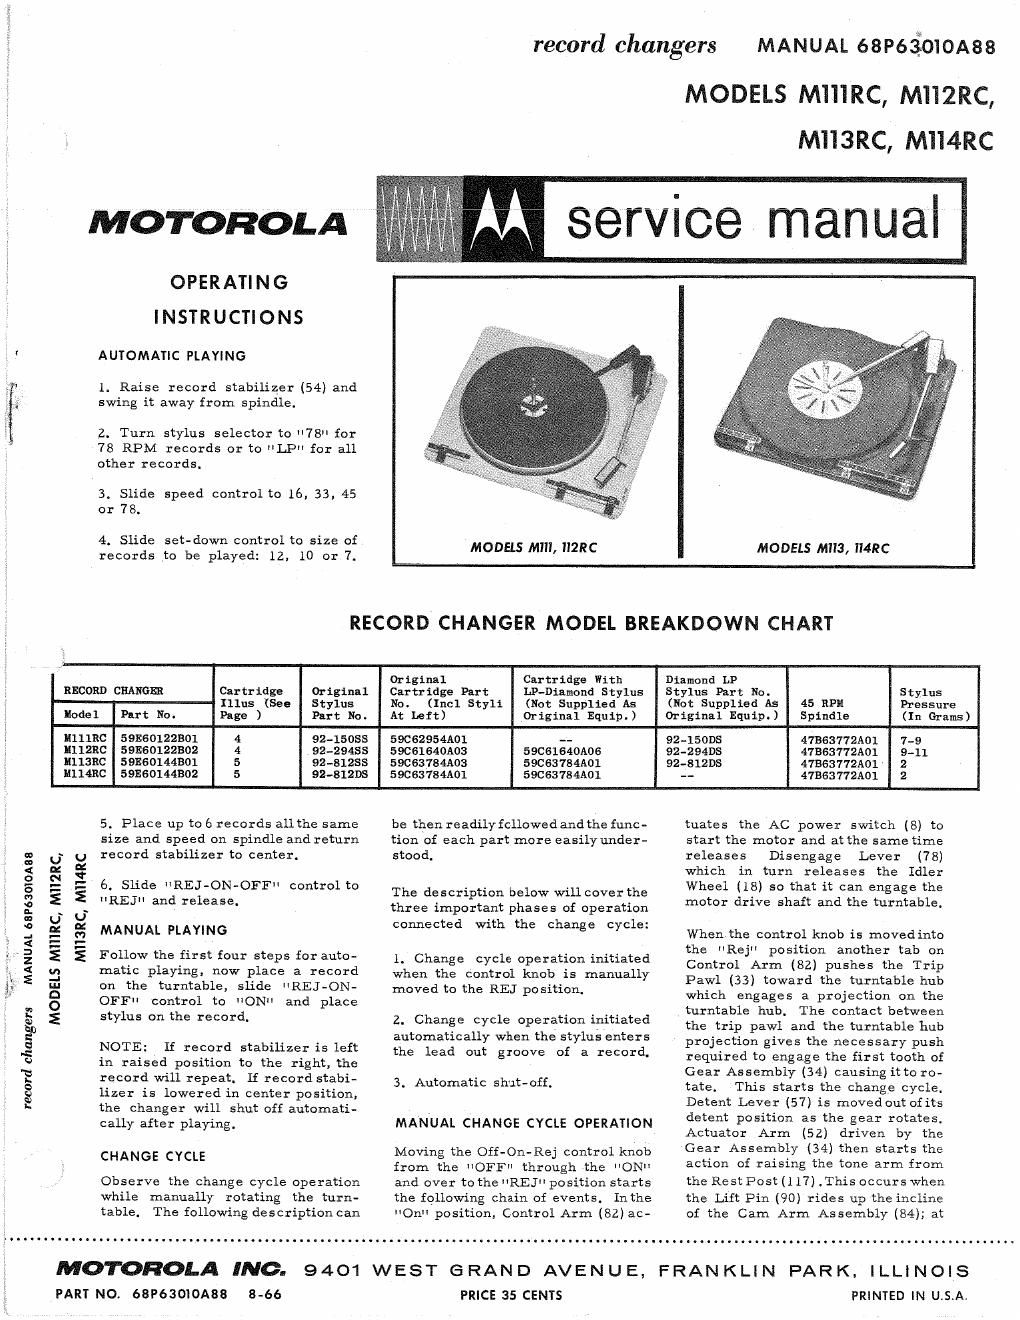 motorola m 113 rc service manual